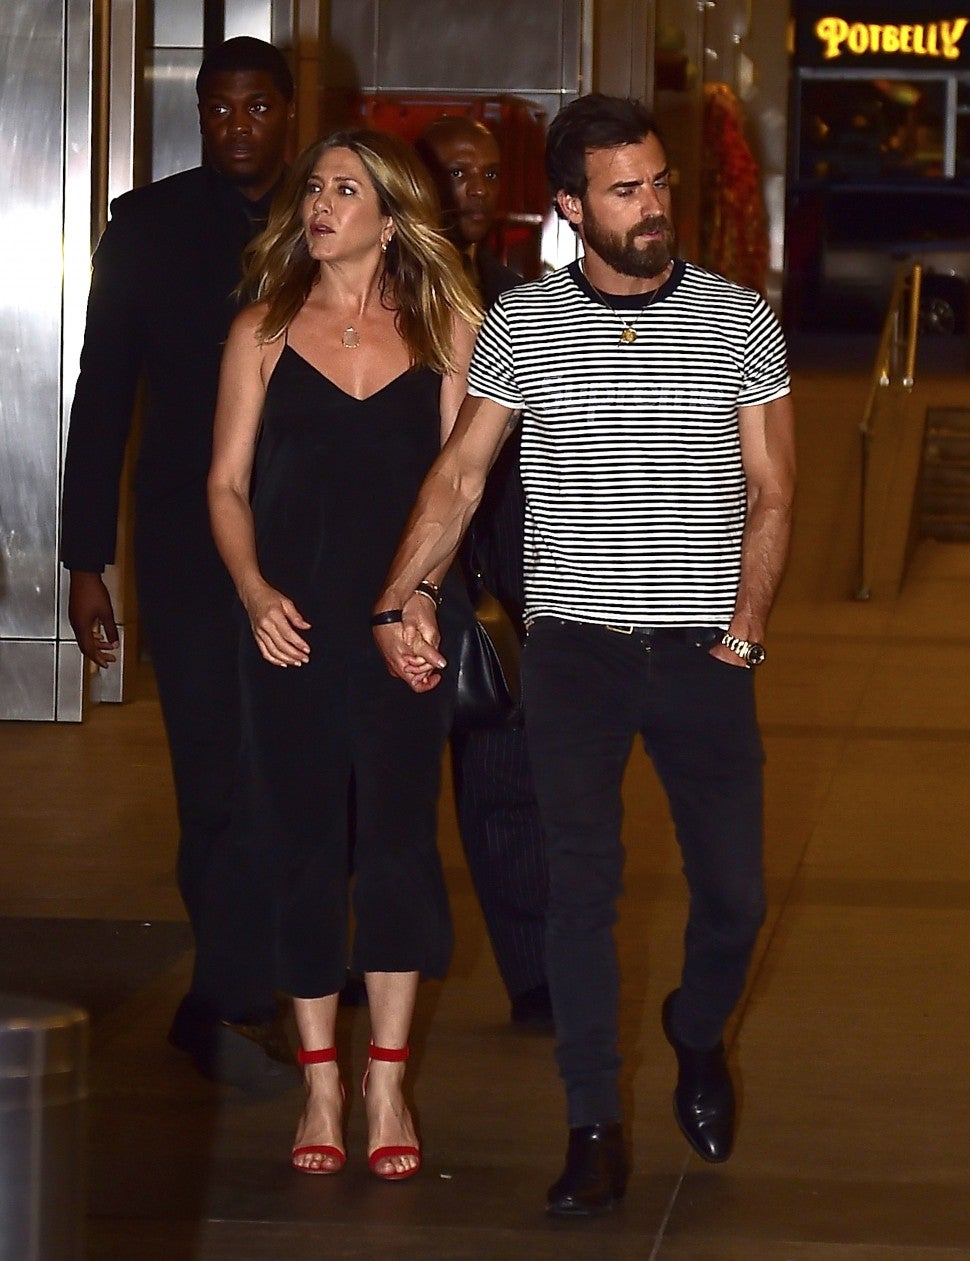 Jennifer Aniston and Justin Theroux